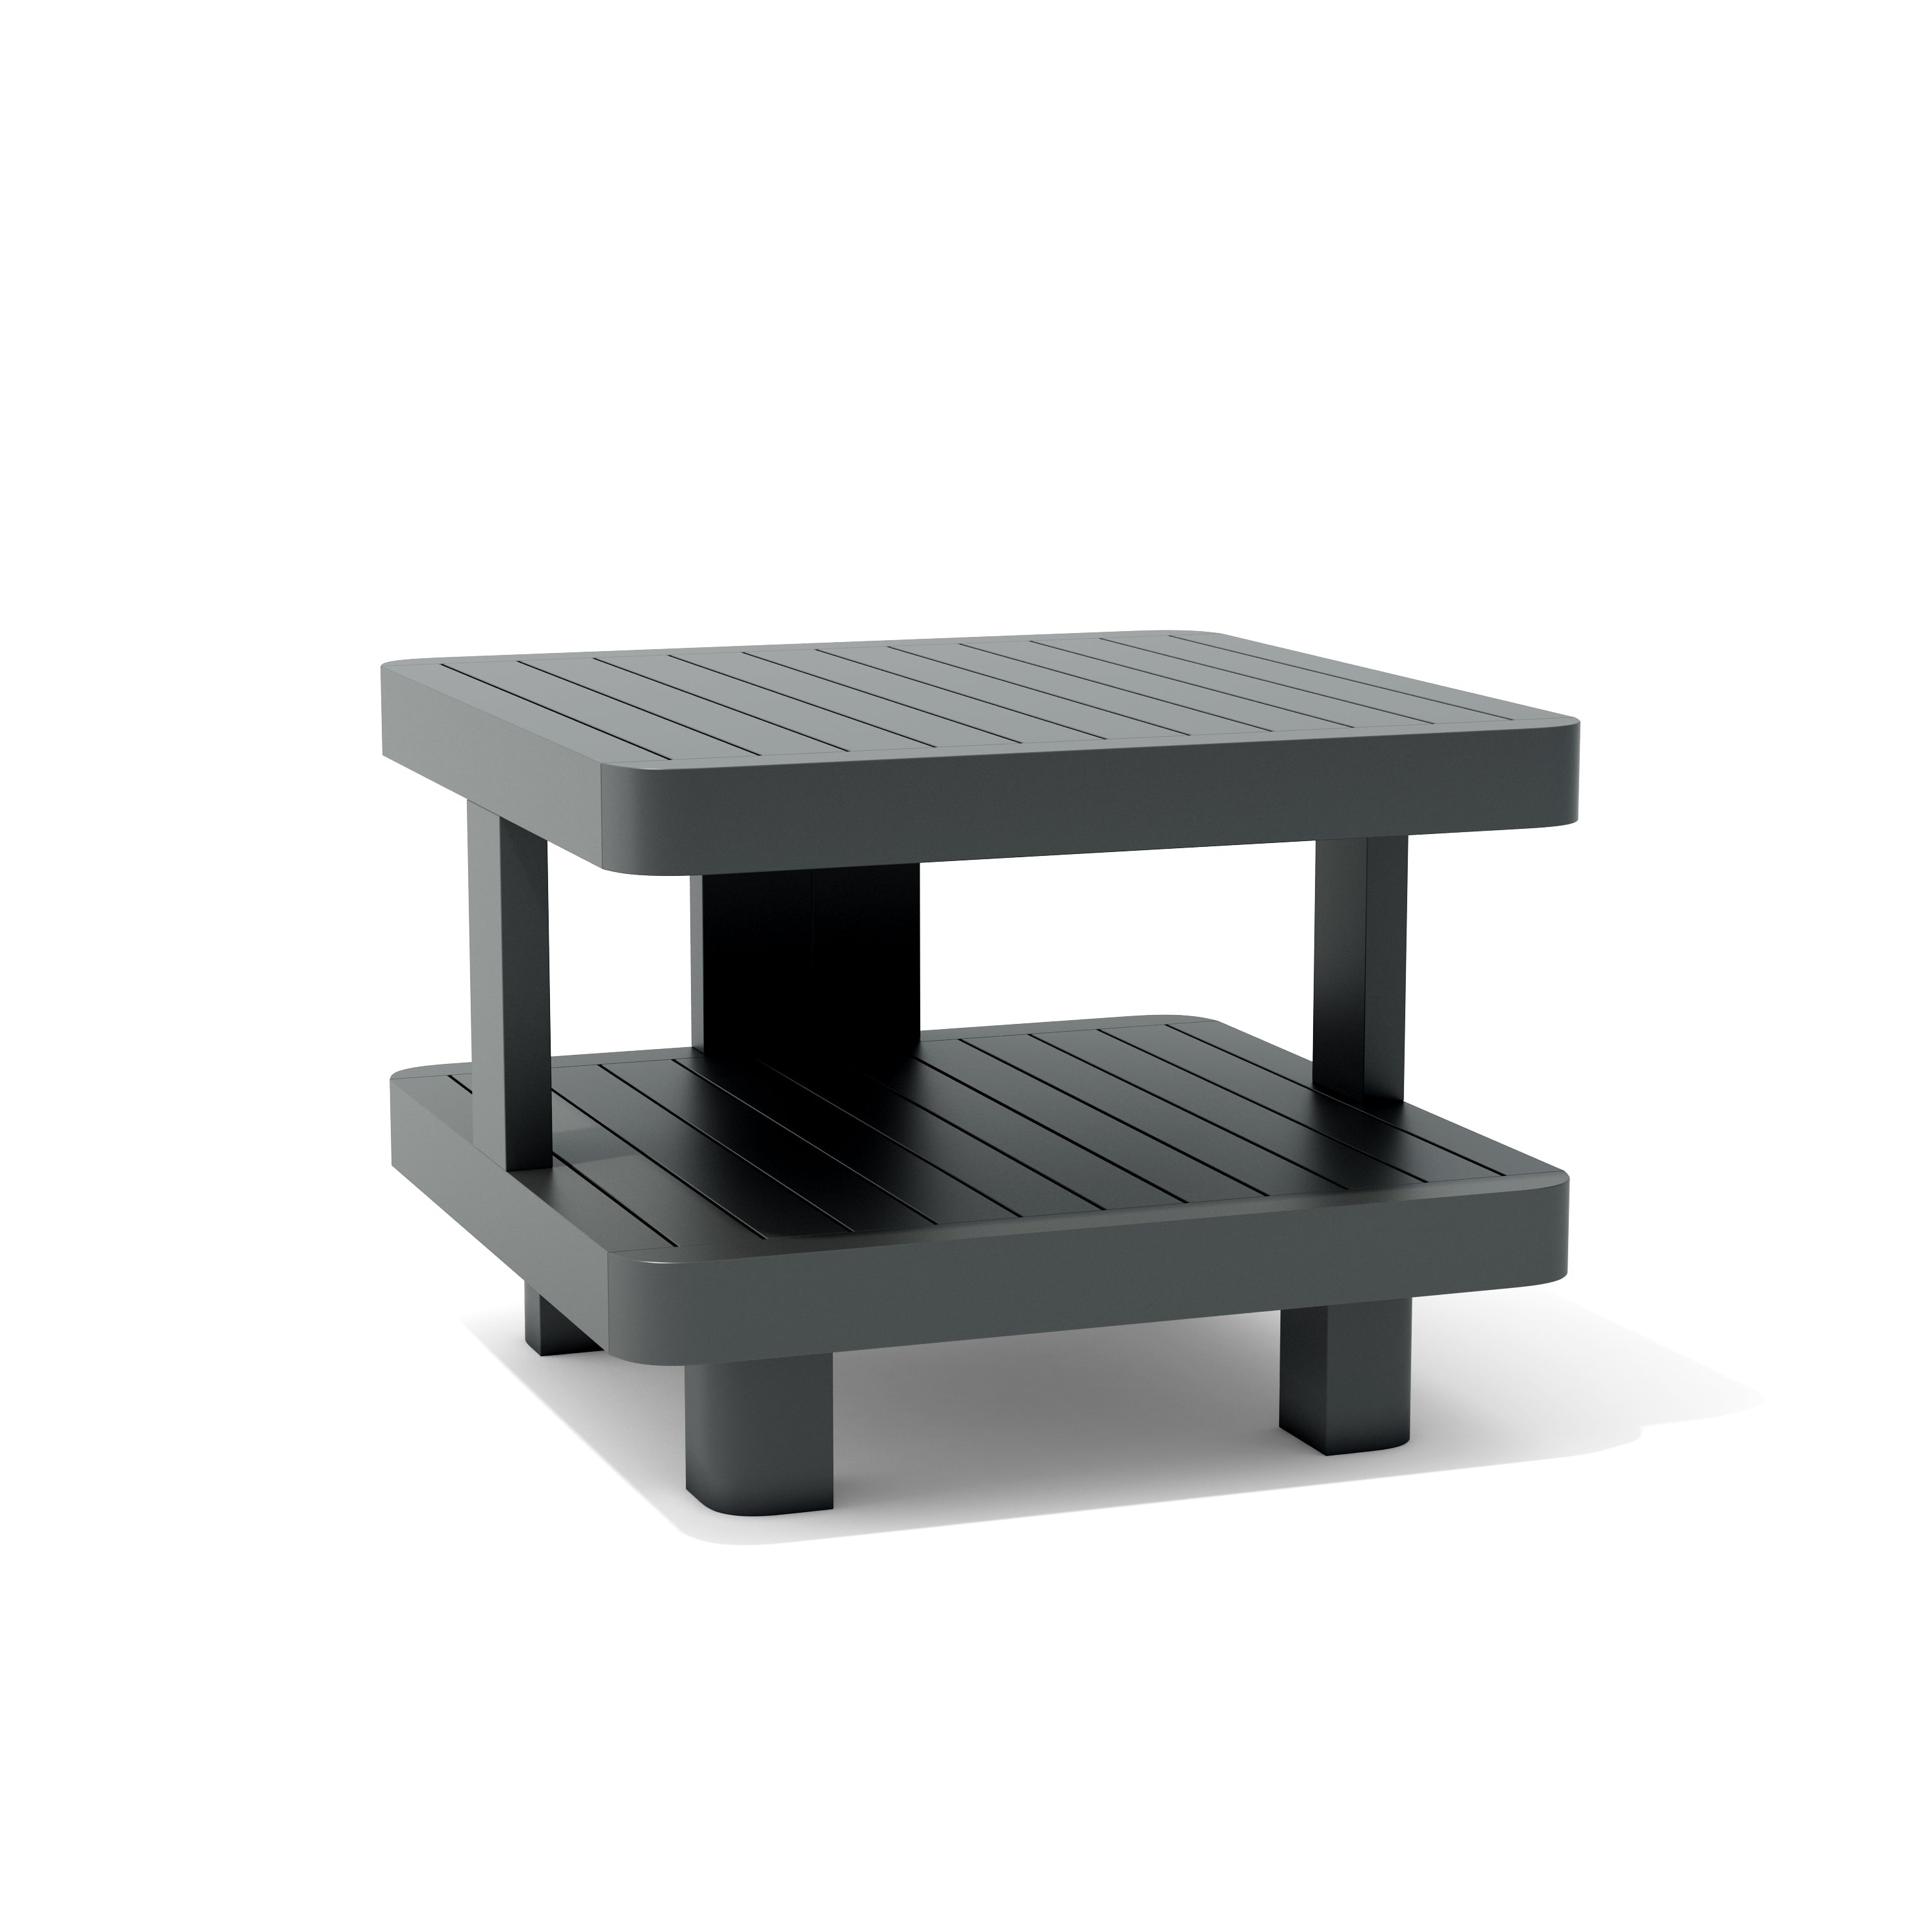 DS-906-AL Anderson Teak Granada Aluminum Side Table